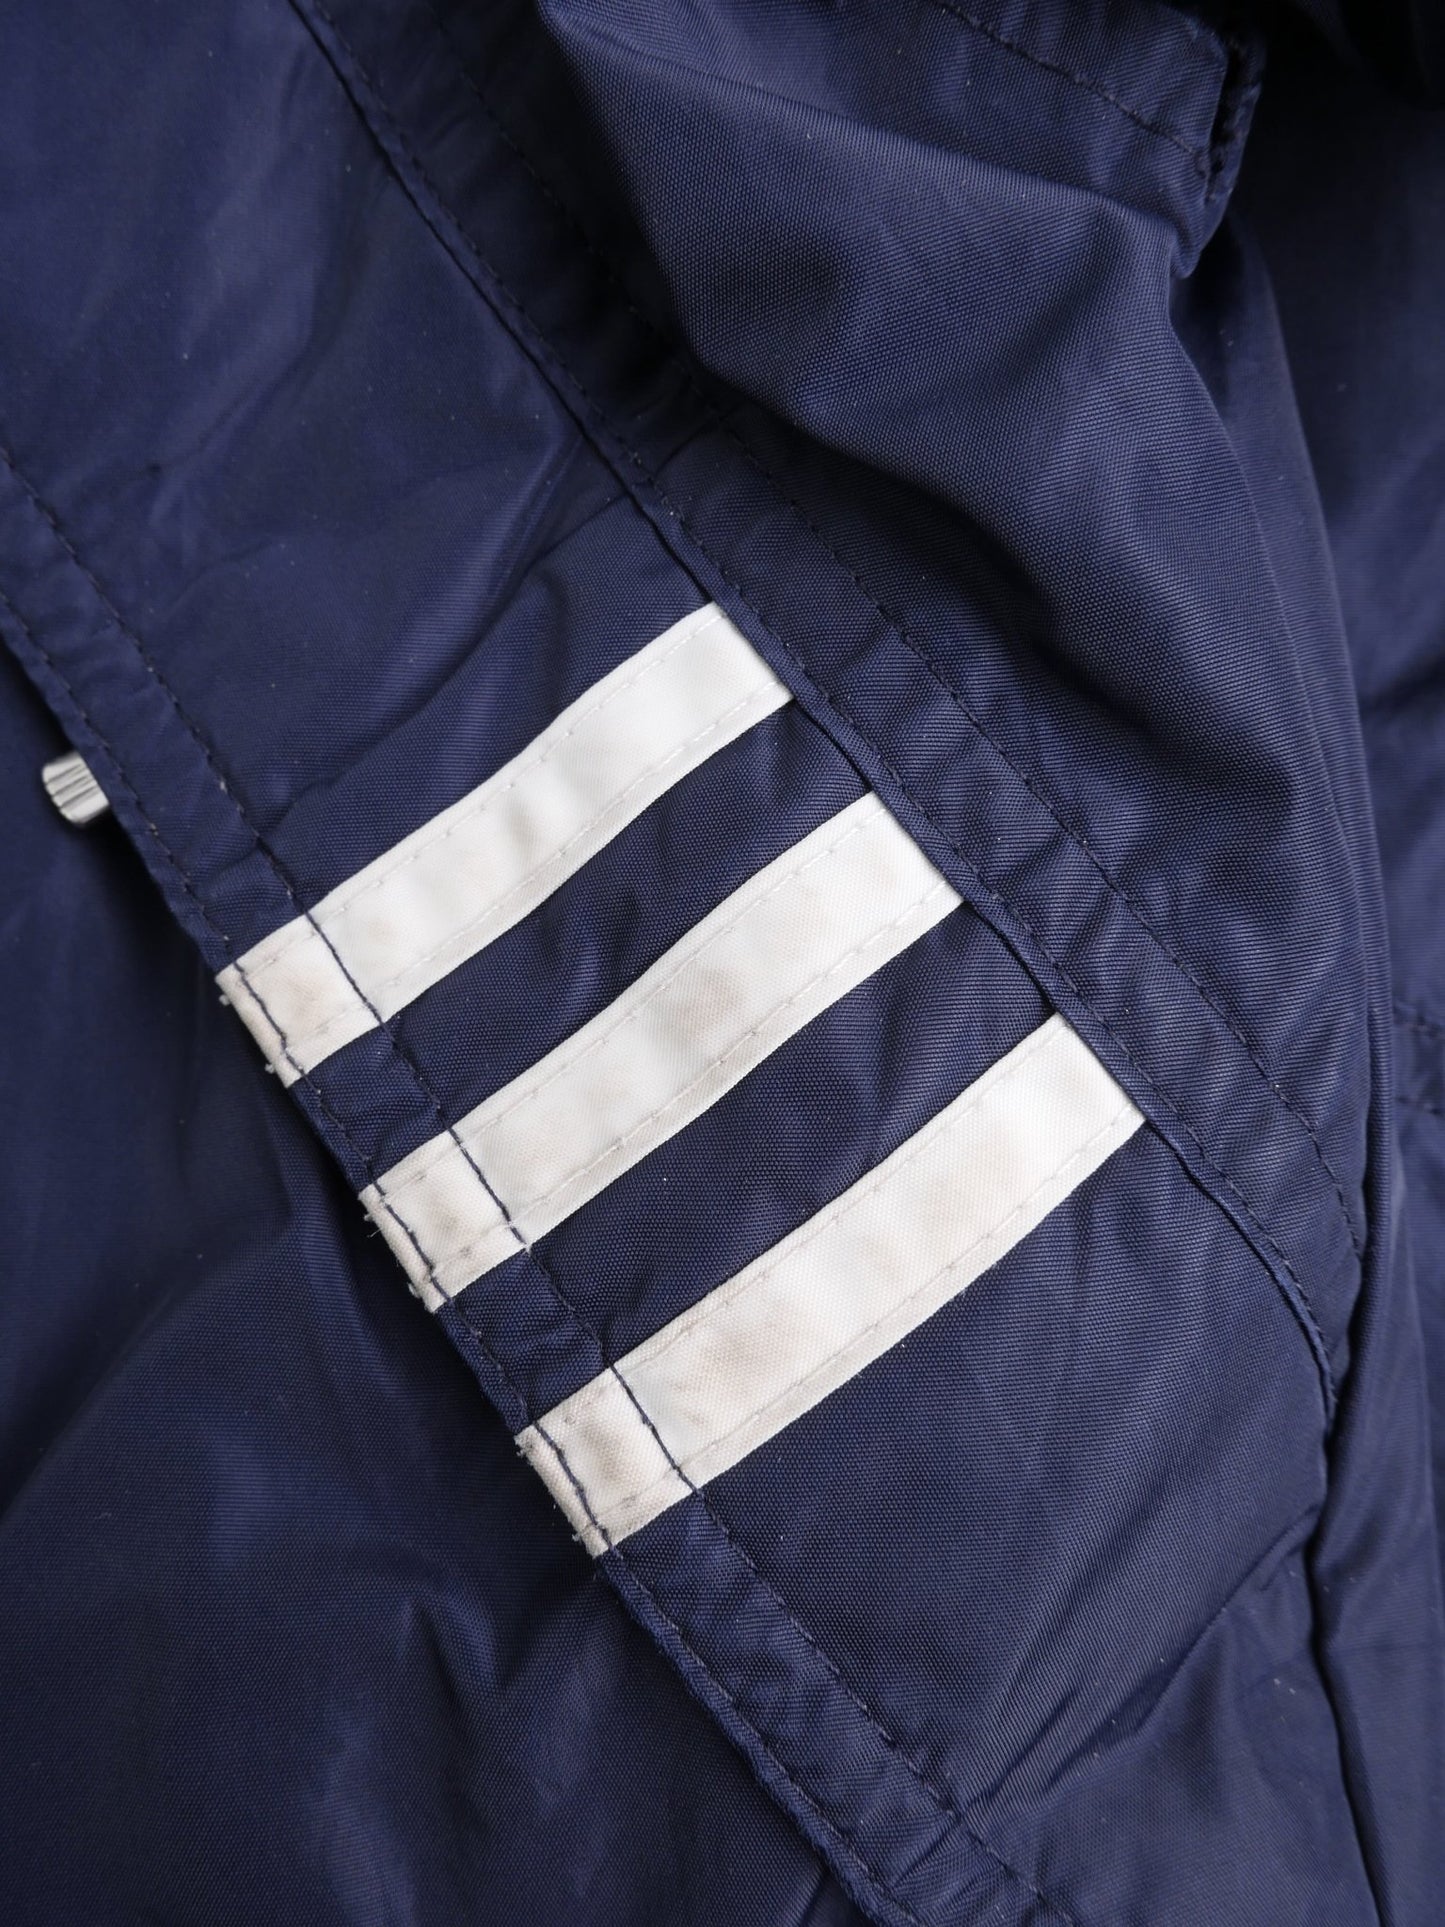 Adidas embroidered Logo navy heavy Jacket - Peeces